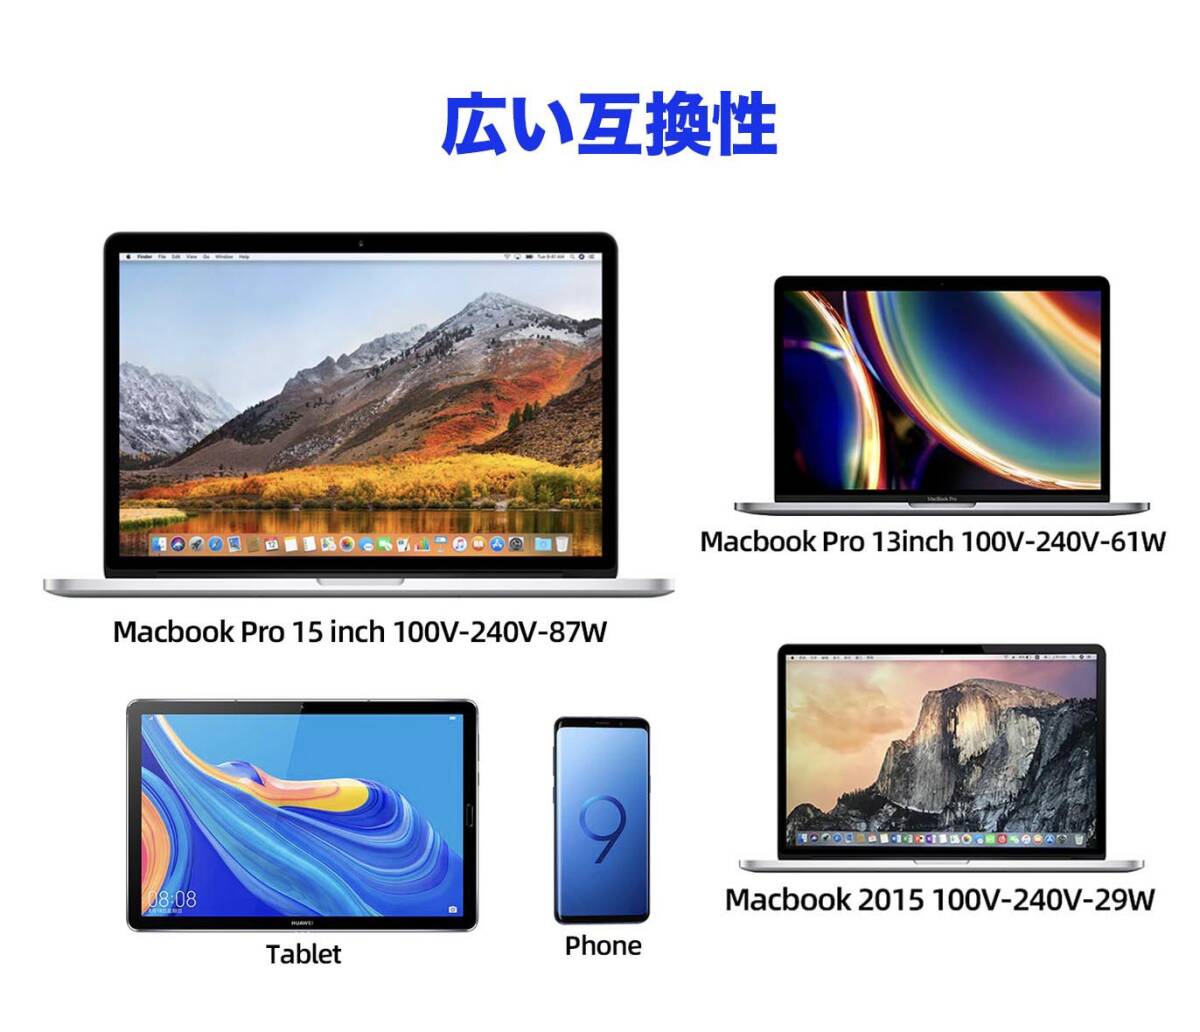 【送料込】100W から120W へUP 120W USB-C ( TYPE-C ) PD マグネットアダプター タイプC MacBook pro iPad Pro 充電 データ転送